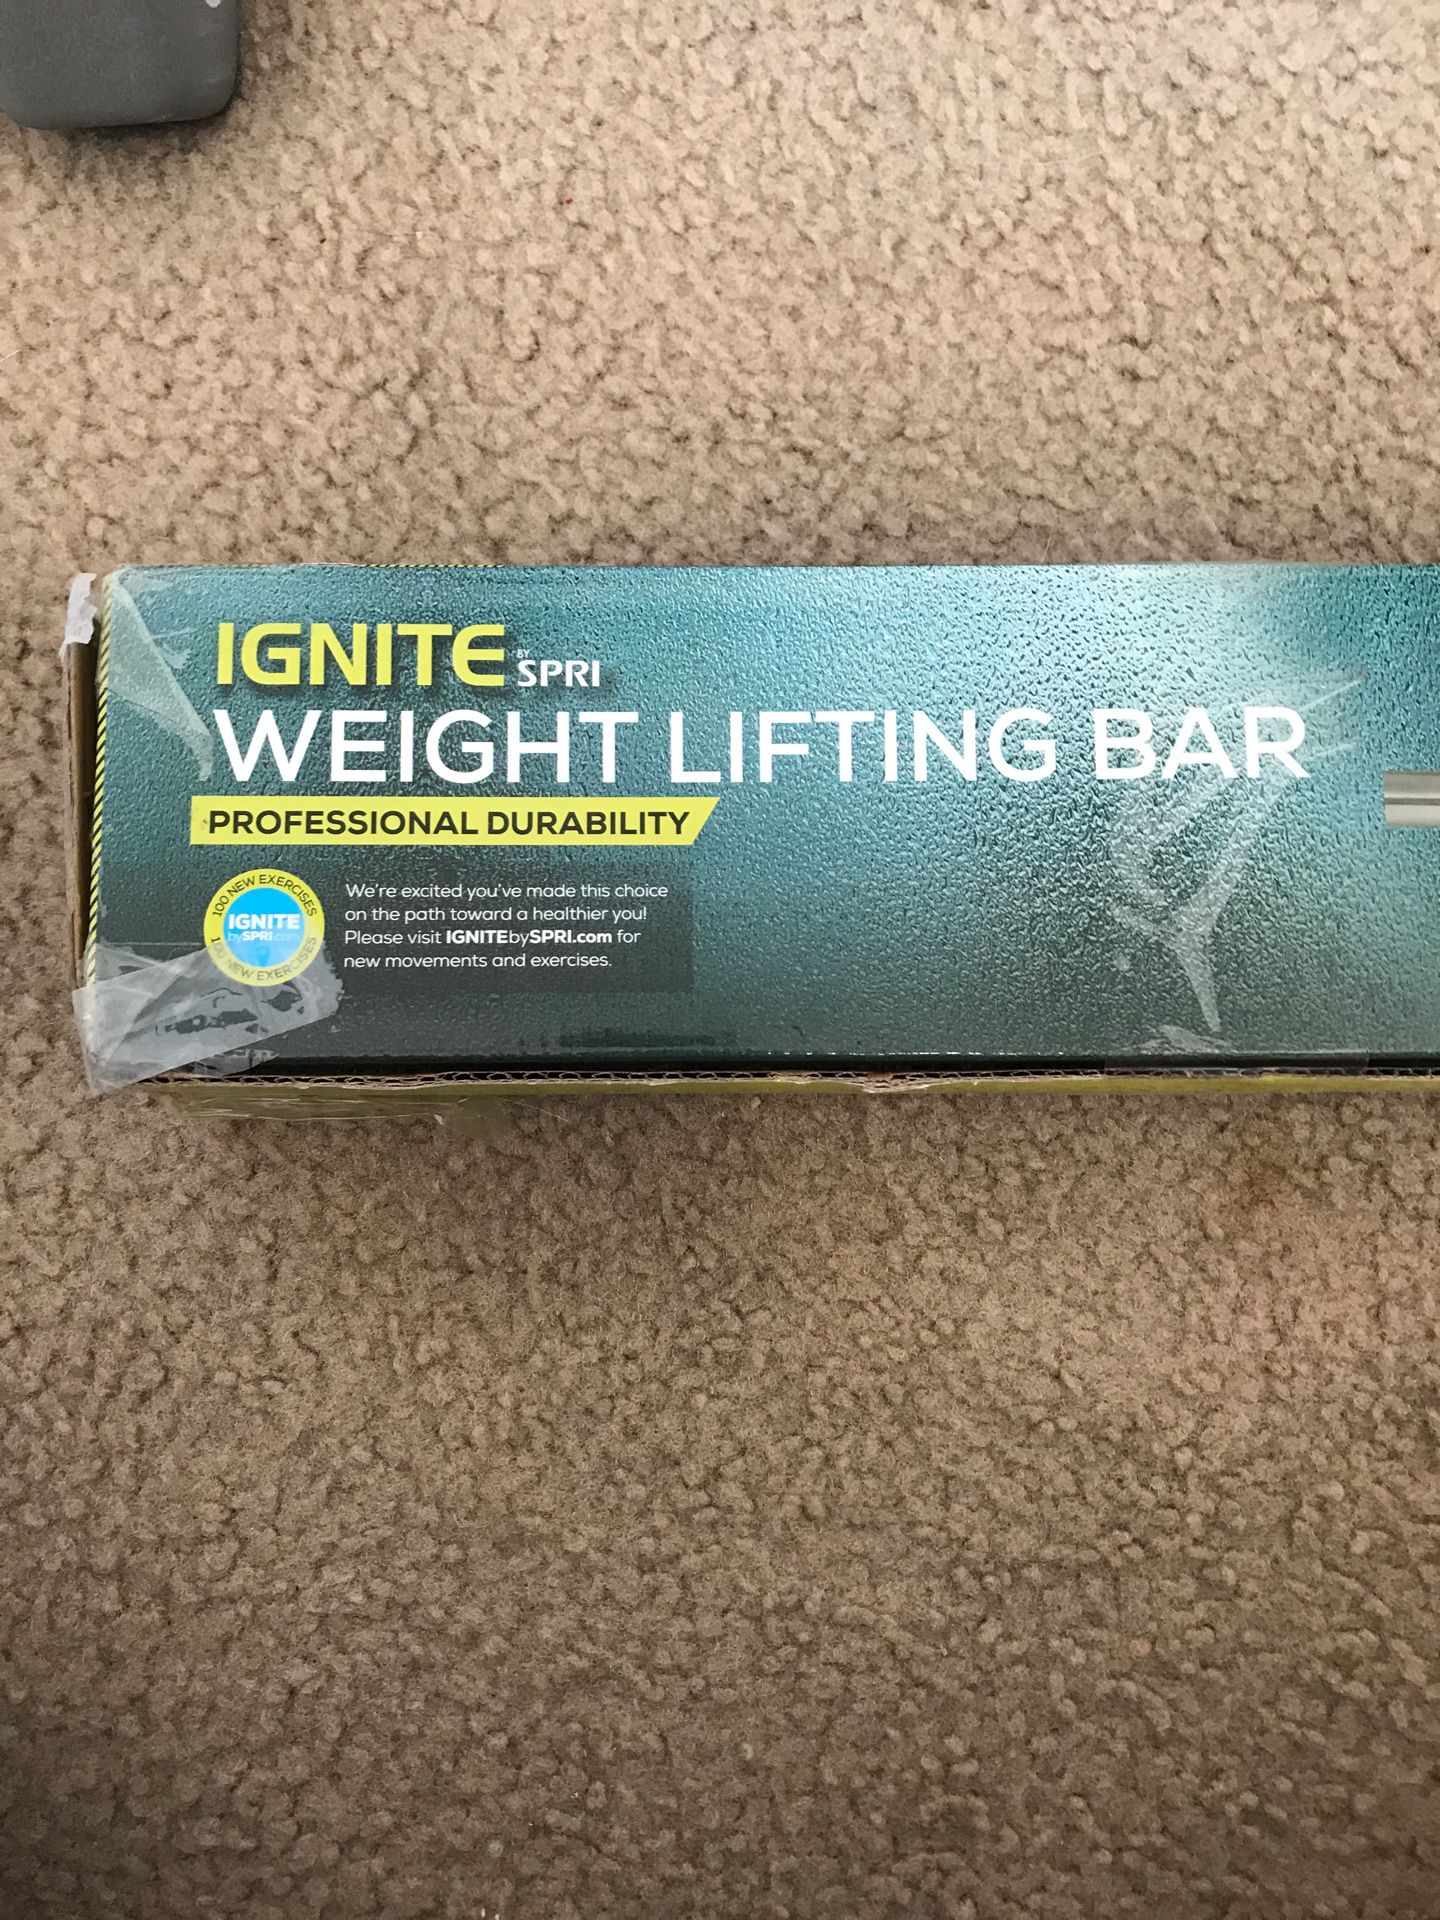 Ignite weight lifting bar